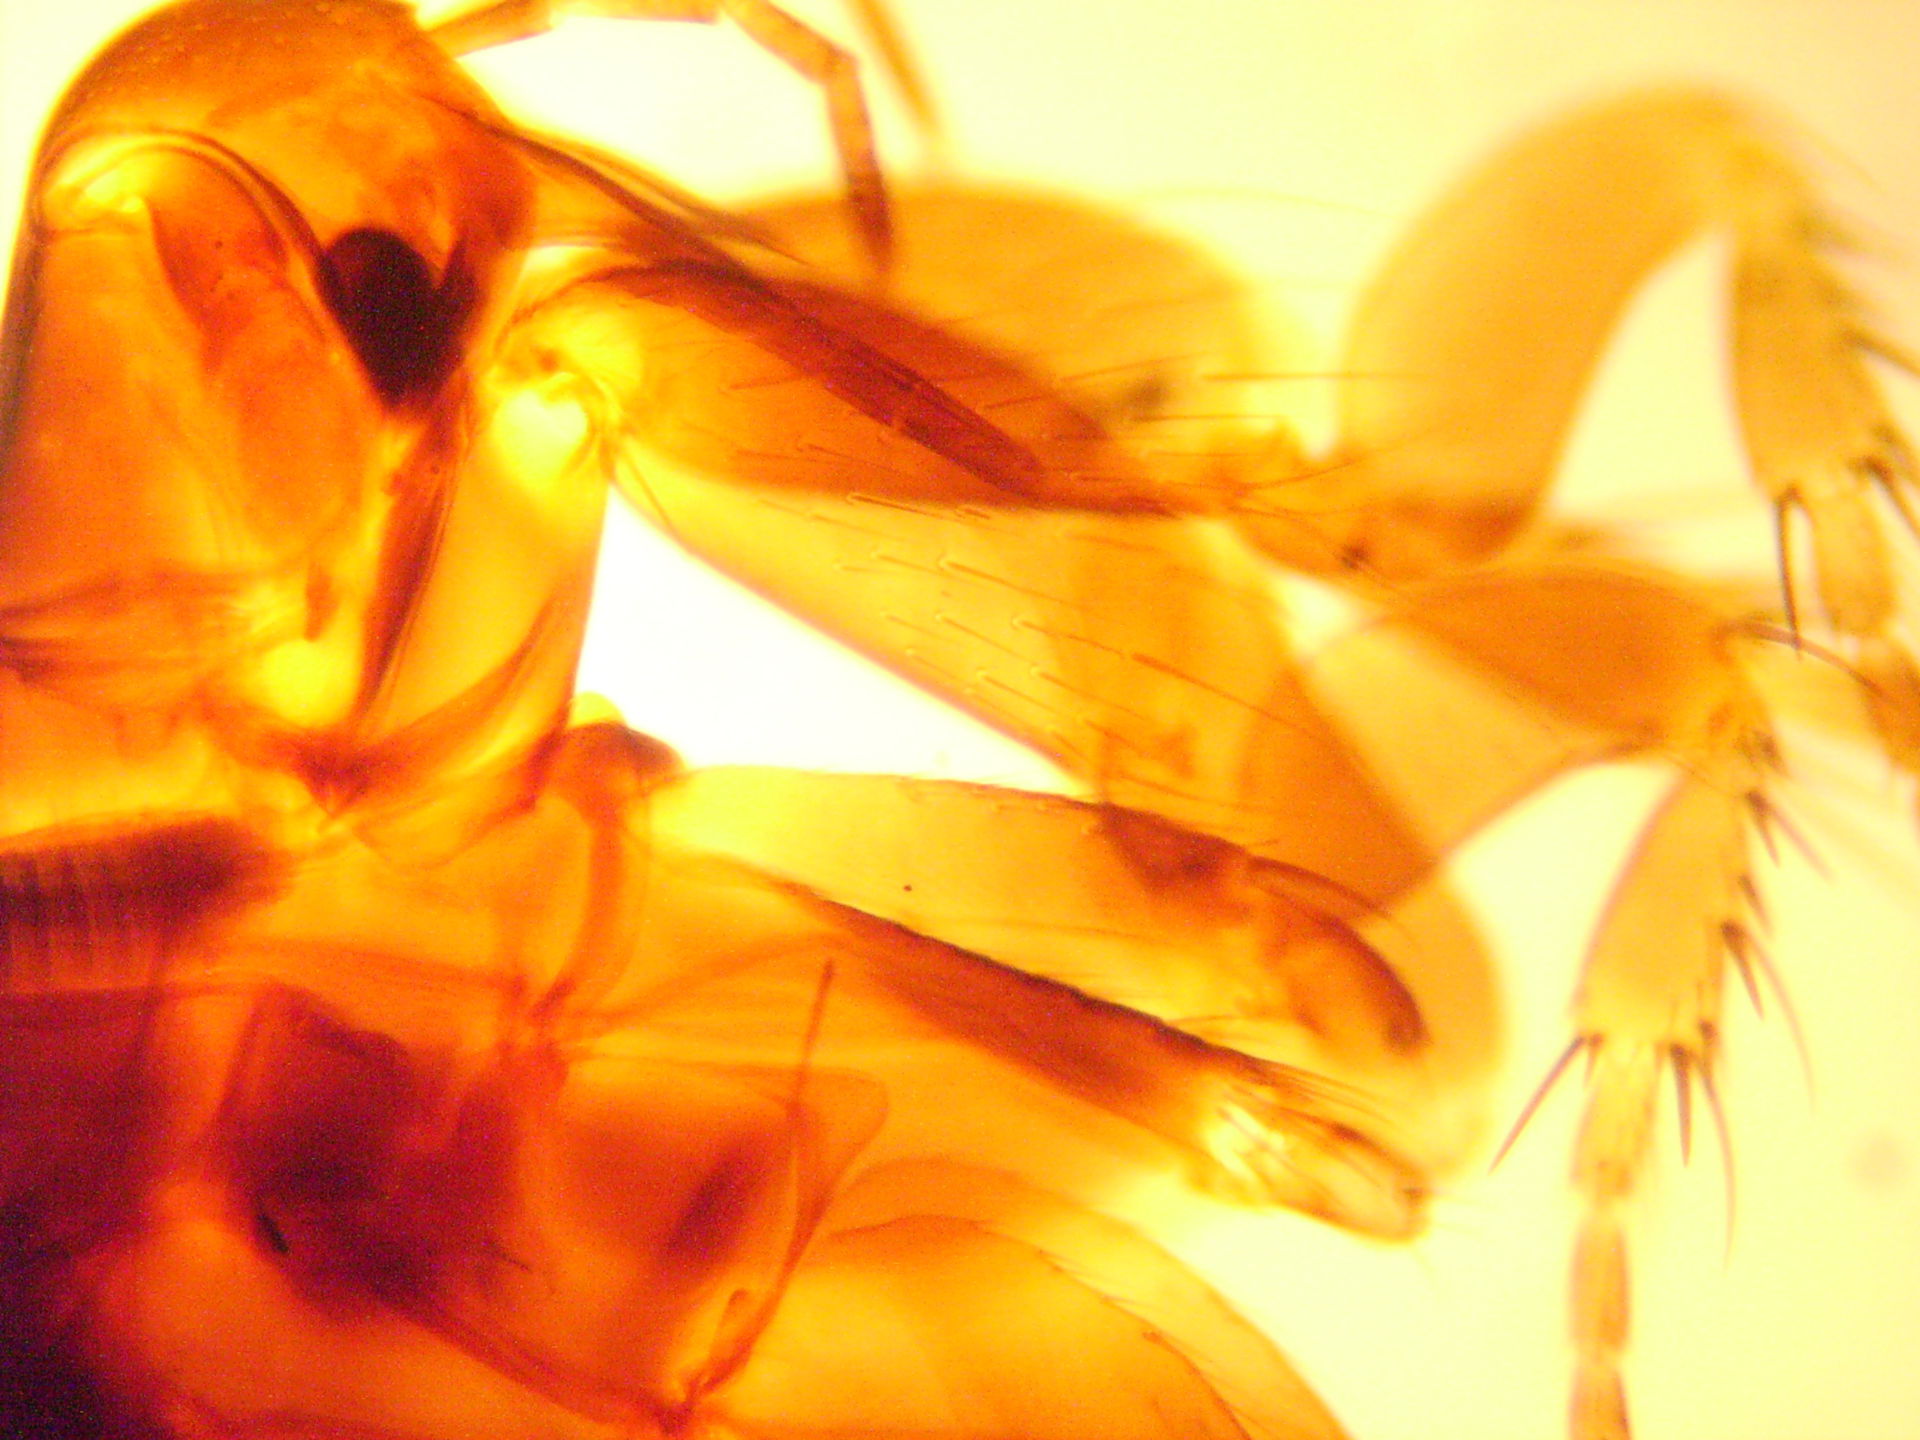 Oriental rat flea - Xenopsylla cheopis - Plague flea